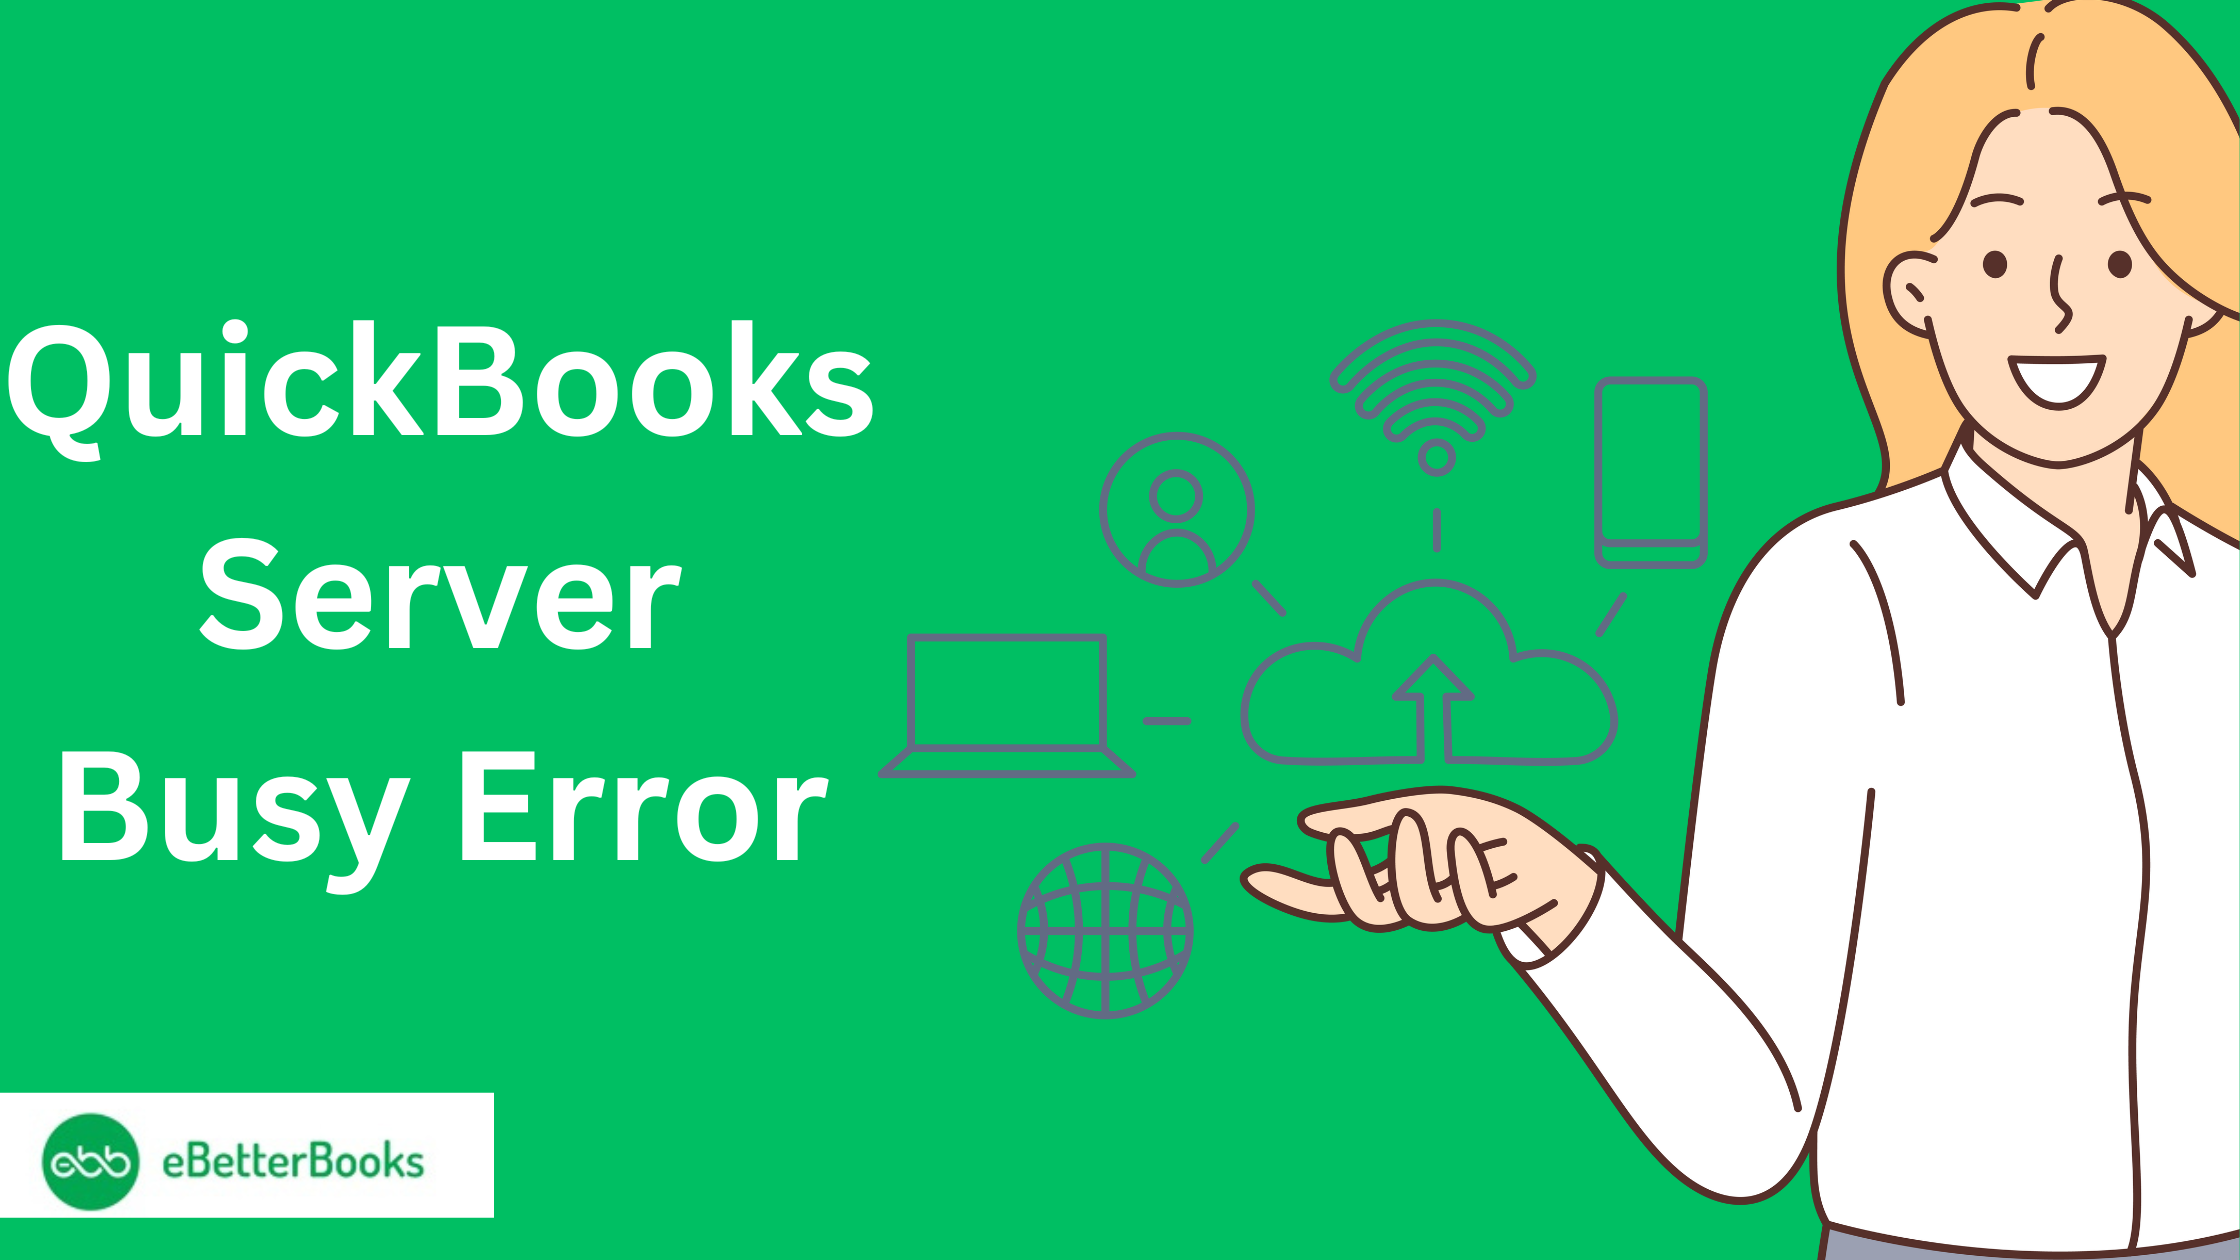 QuickBooks Server Busy Error Image